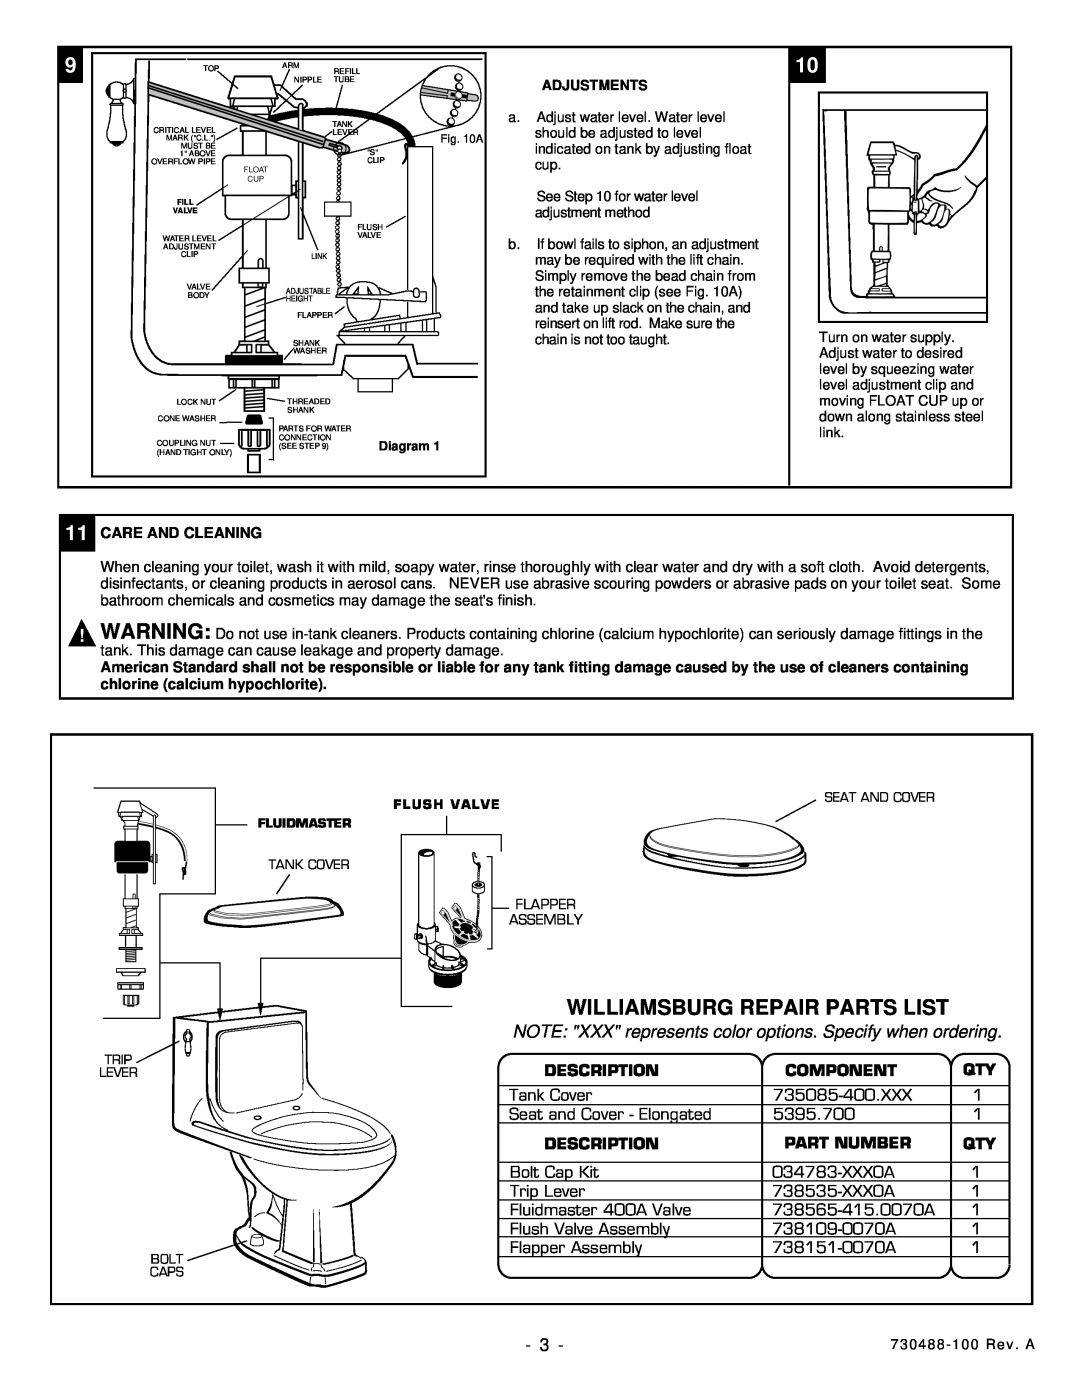 American Standard 2038.700 installation instructions Williamsburg Repair Parts List, Description, Component, Part Number 